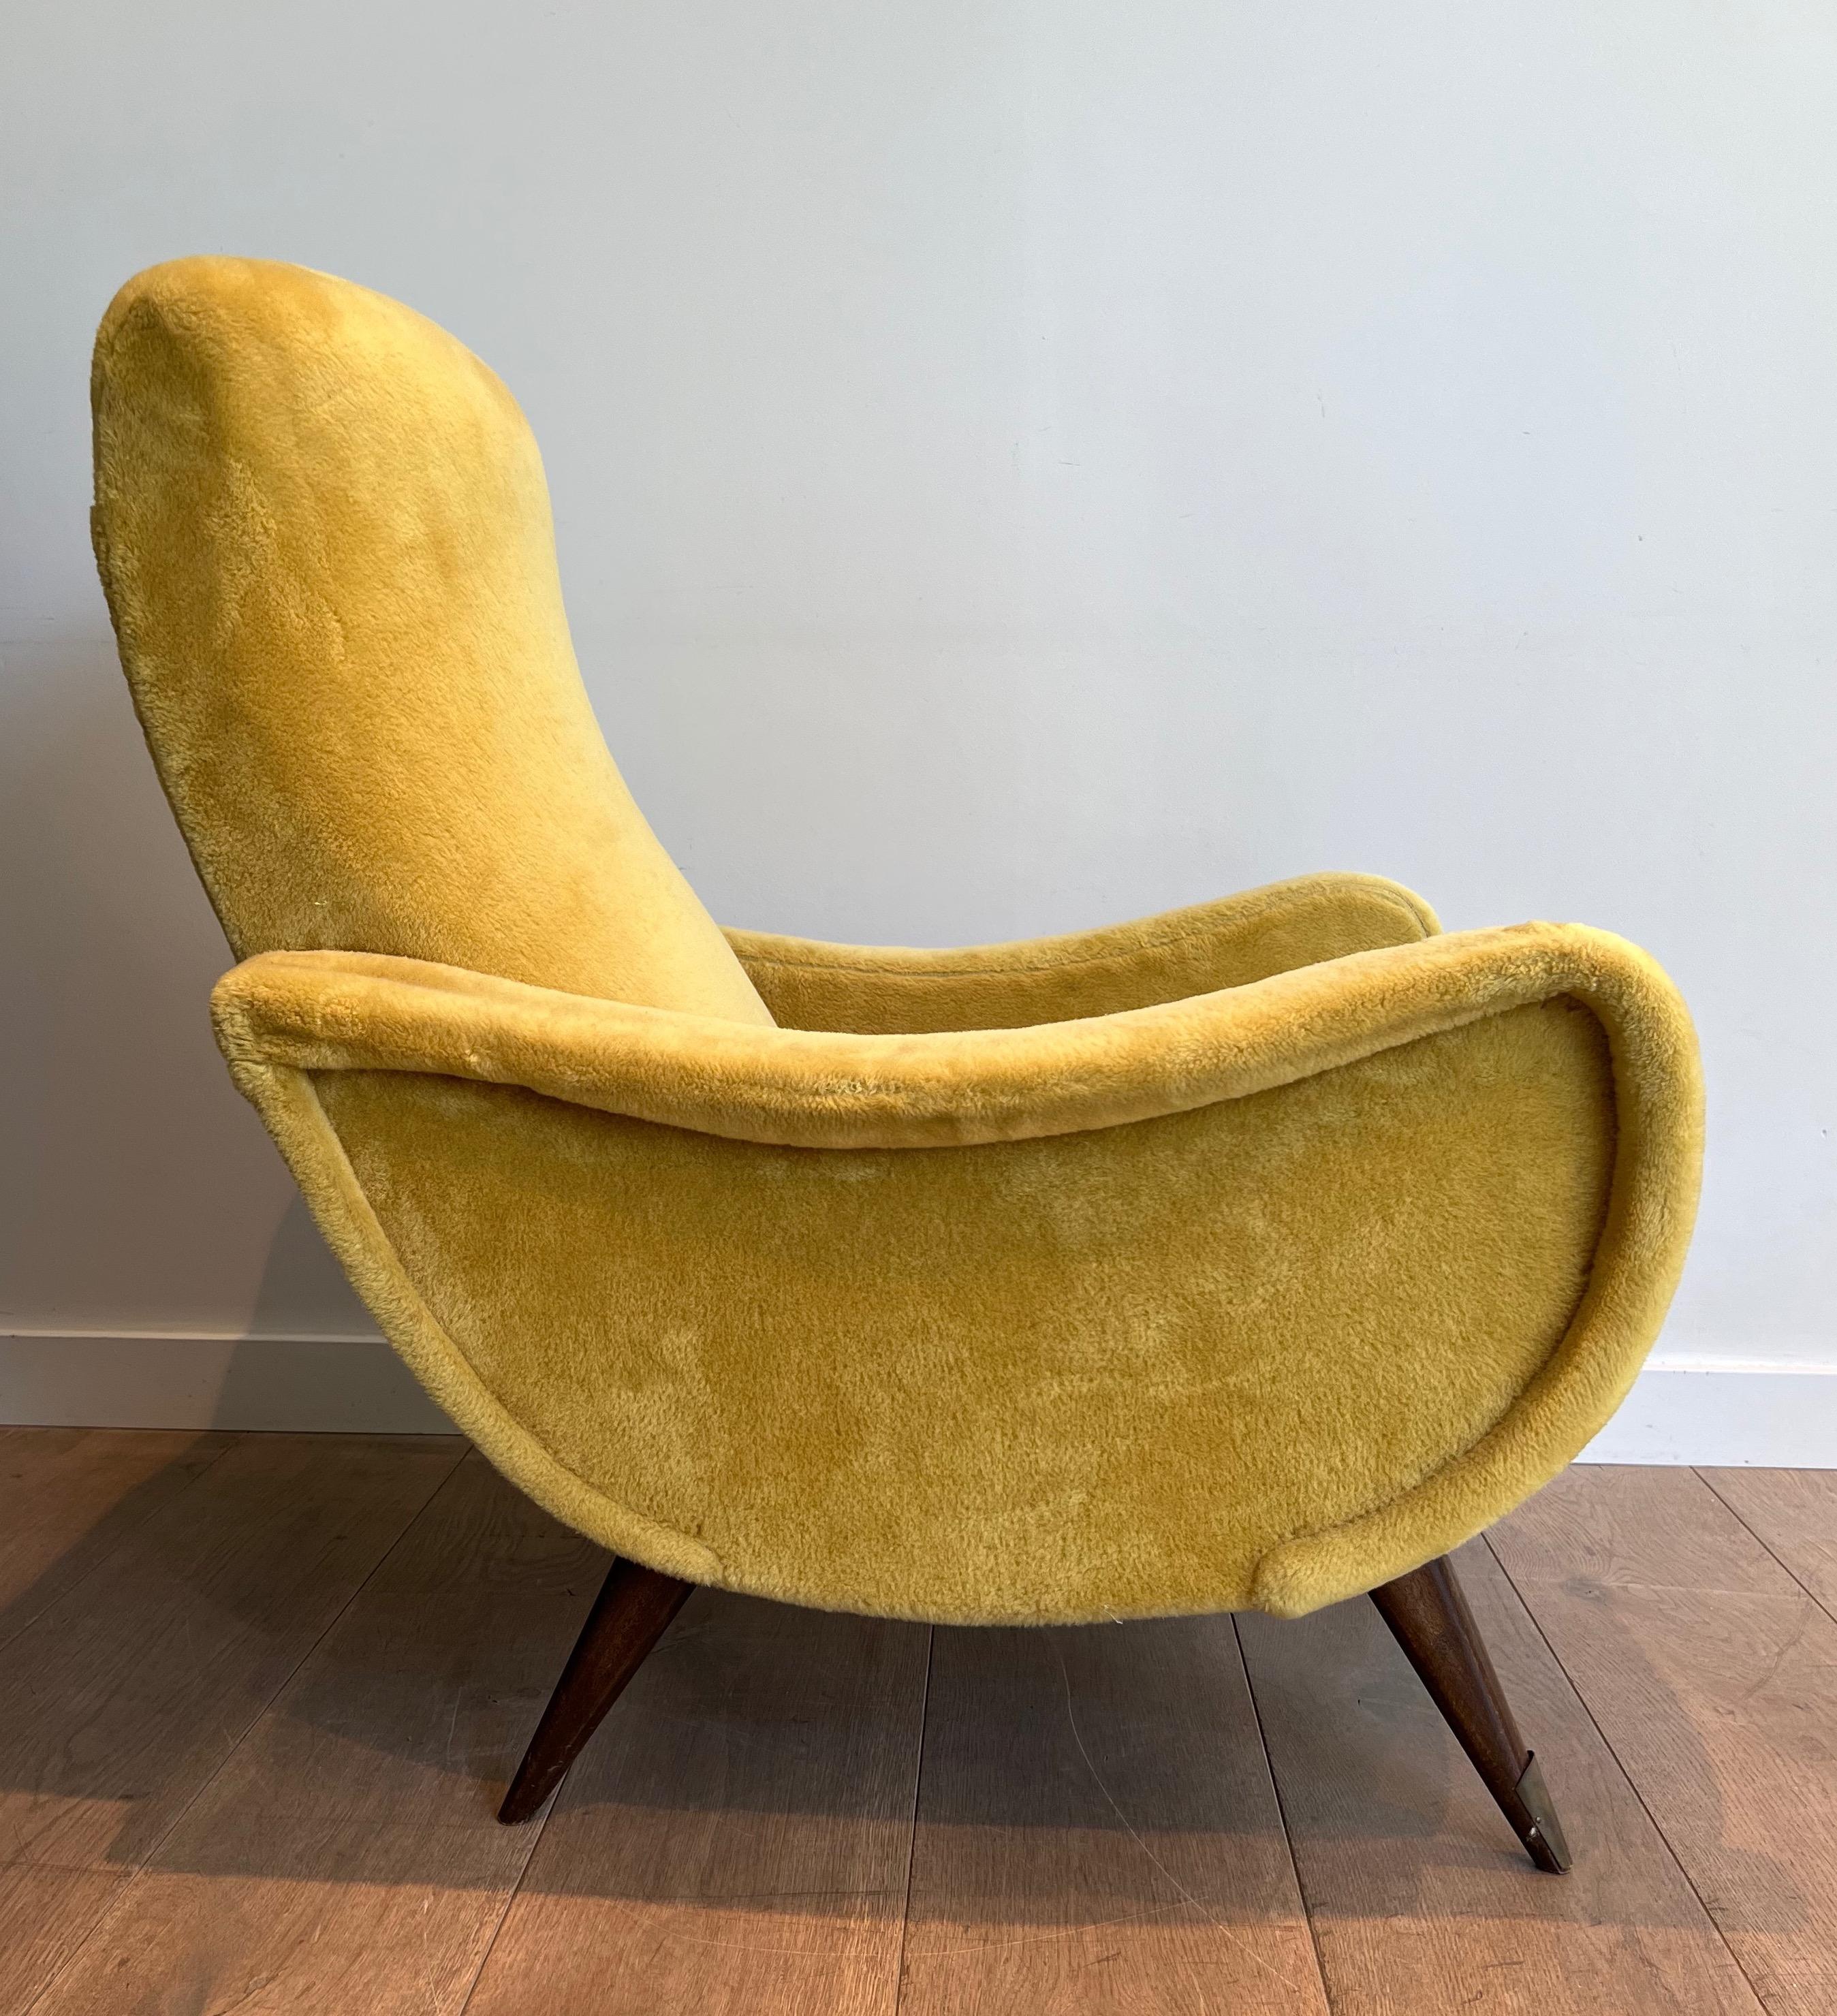 20th Century Pair of Design Armchairs in Yellow Velvet by Marco Zanusso. Circa 1960